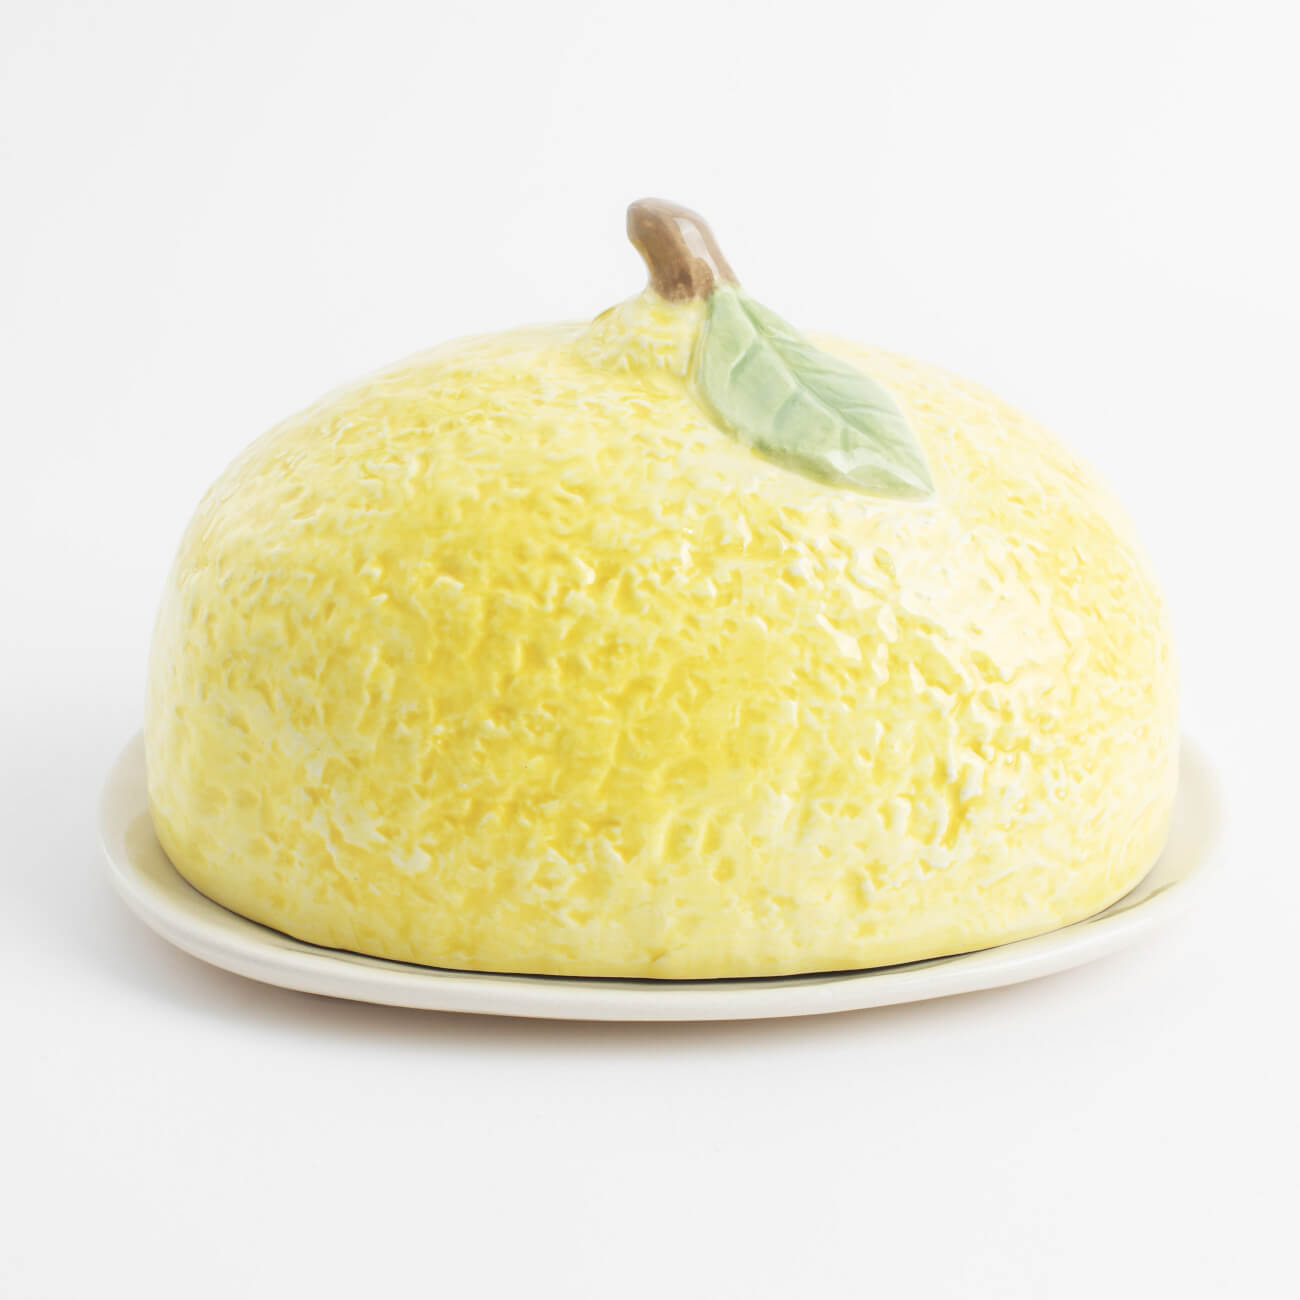 Масленка, 18 см, керамика, овальная, желтая, Лимон, Sicily in bloom масленка bekker koch хром